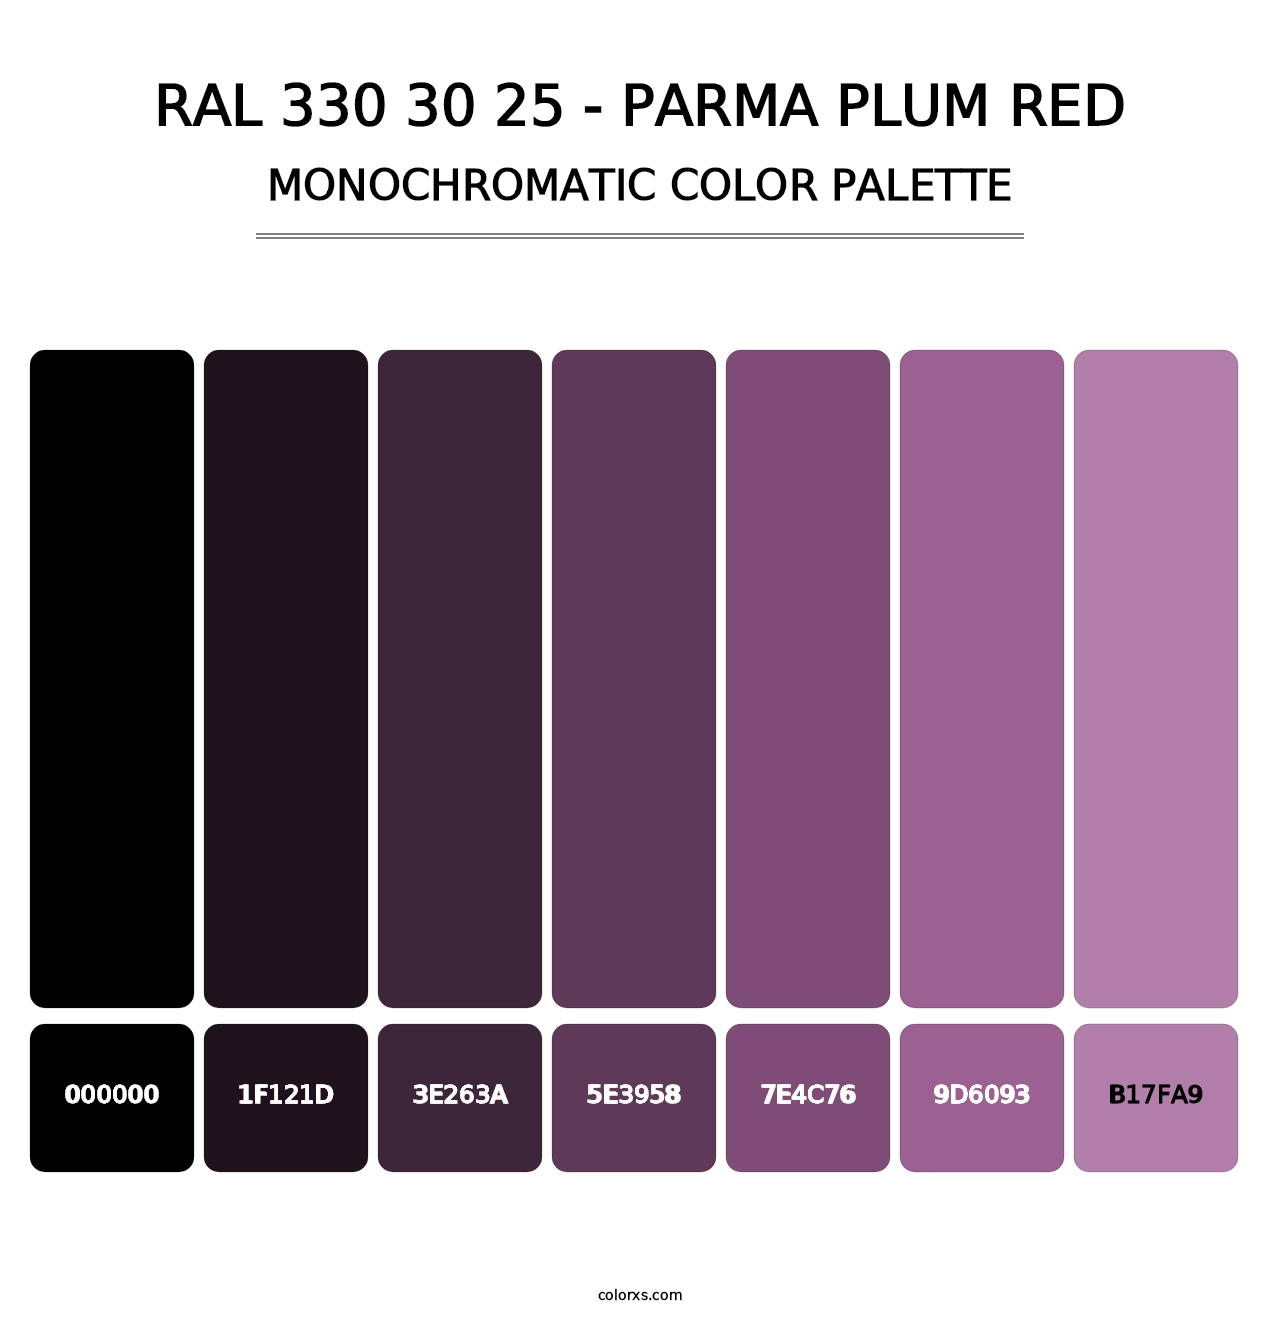 RAL 330 30 25 - Parma Plum Red - Monochromatic Color Palette